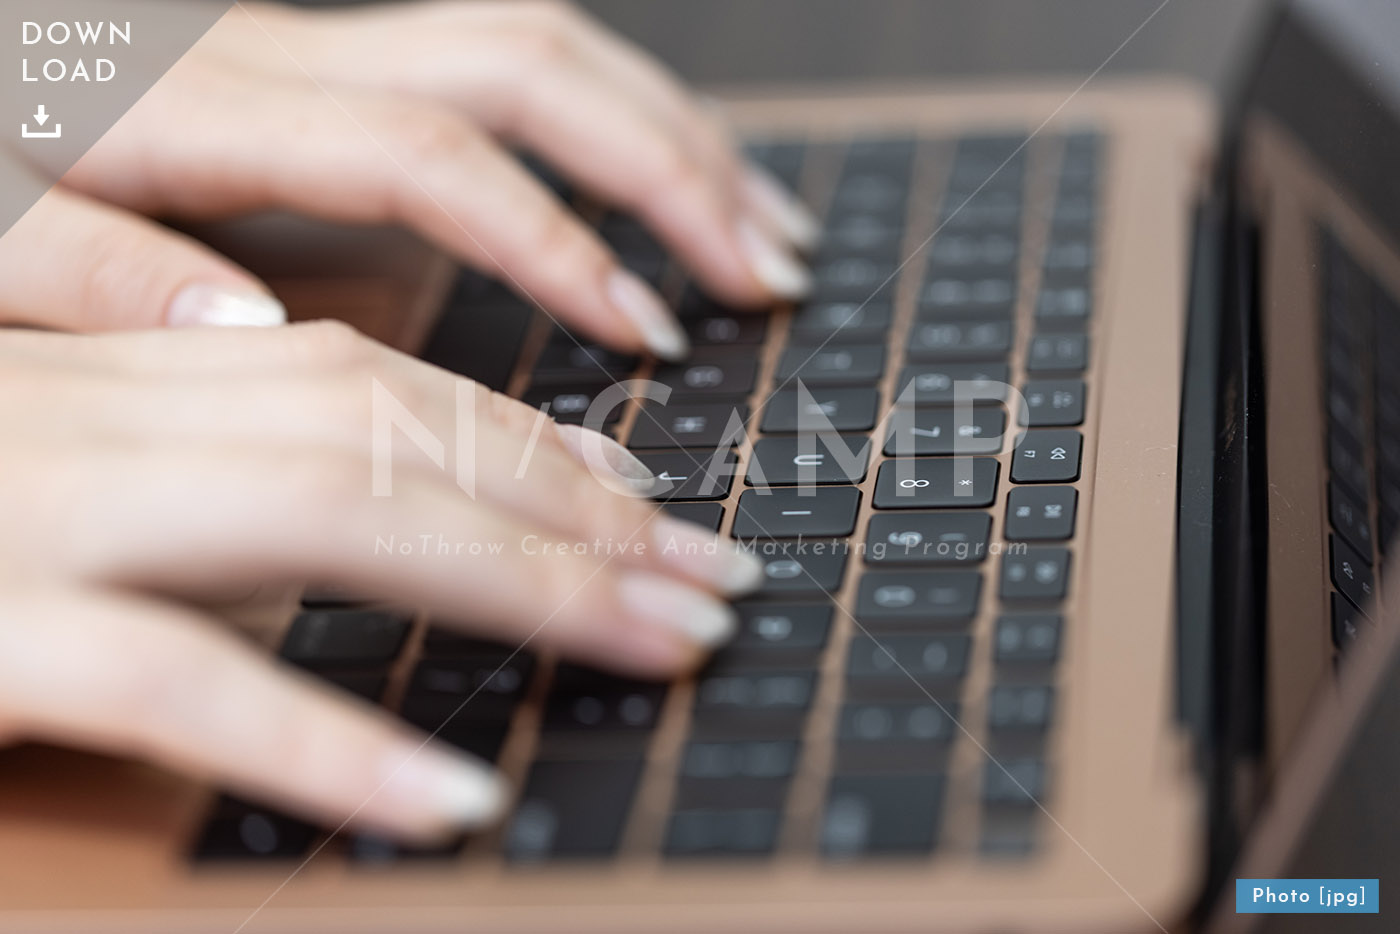 Mac・パソコンを操作する女性手元